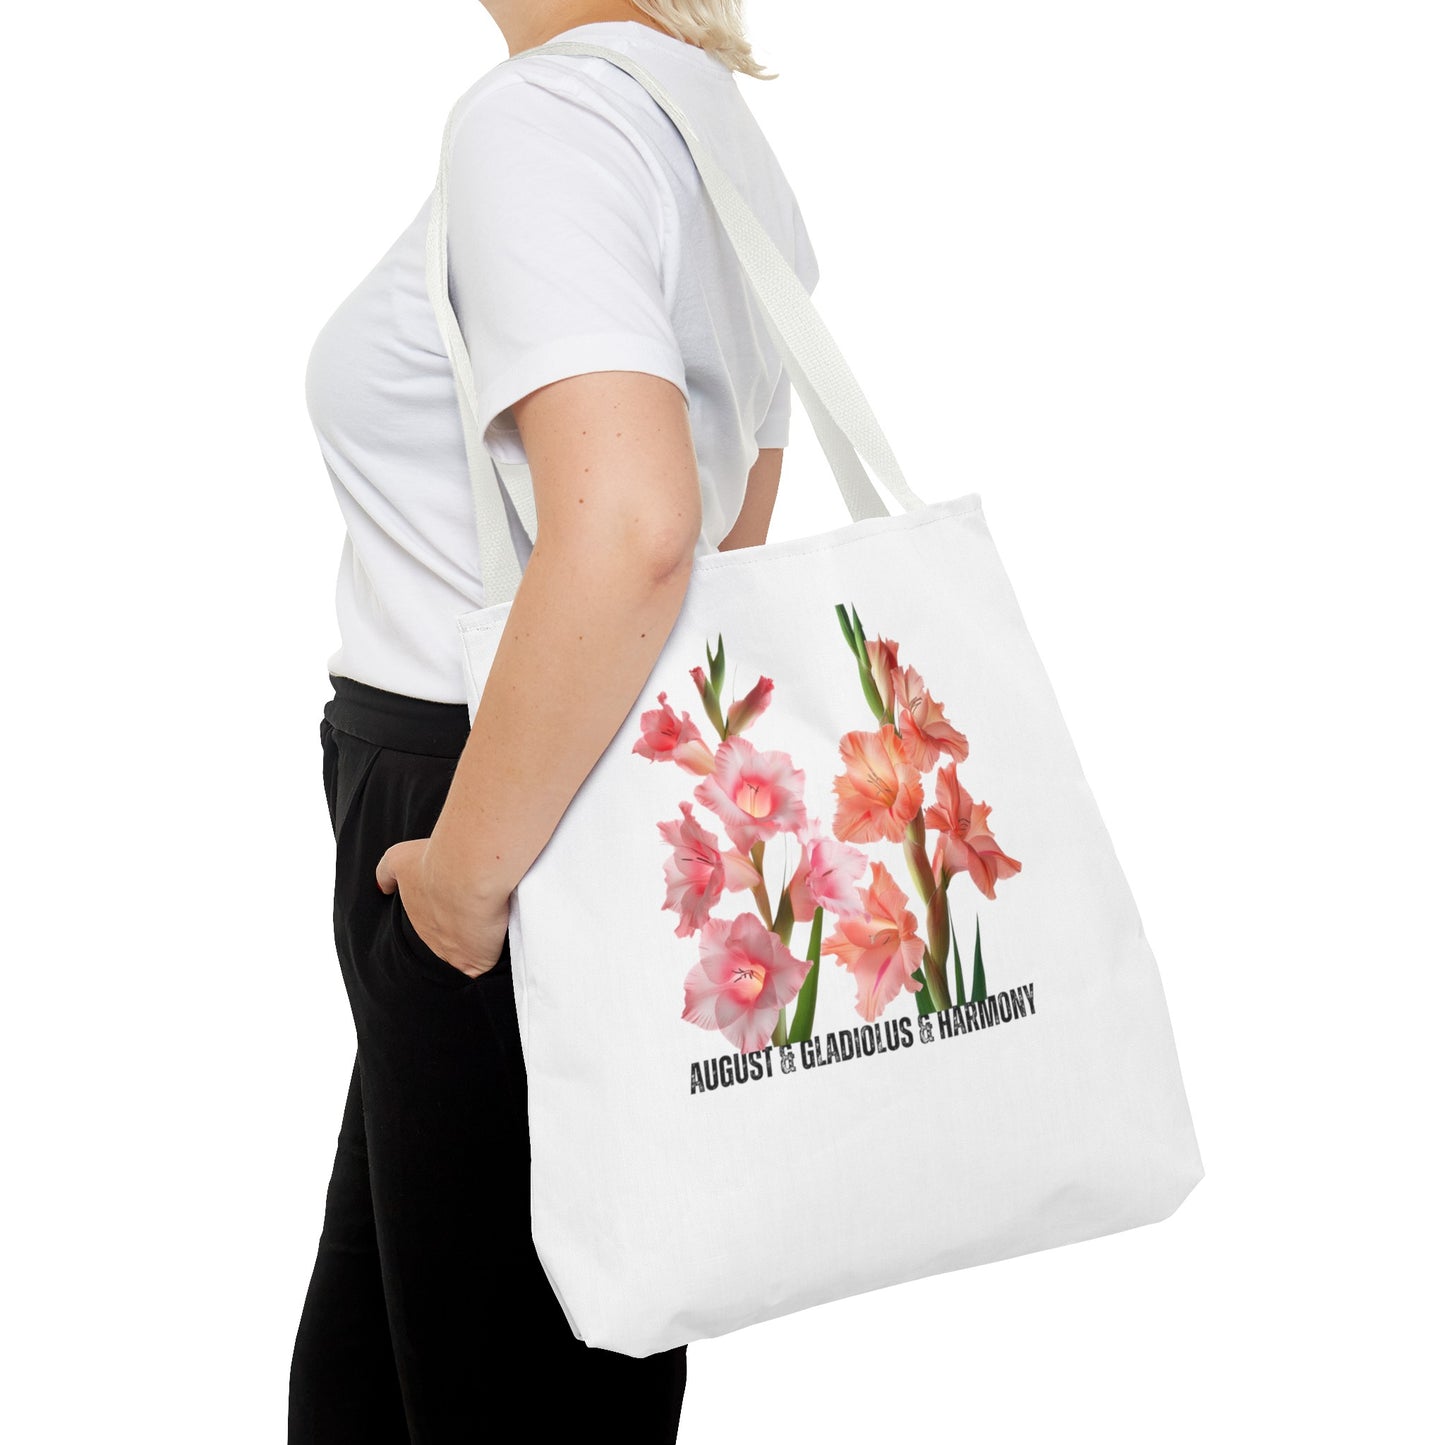 Happy birthday August, Gladiolus - Tote Bag